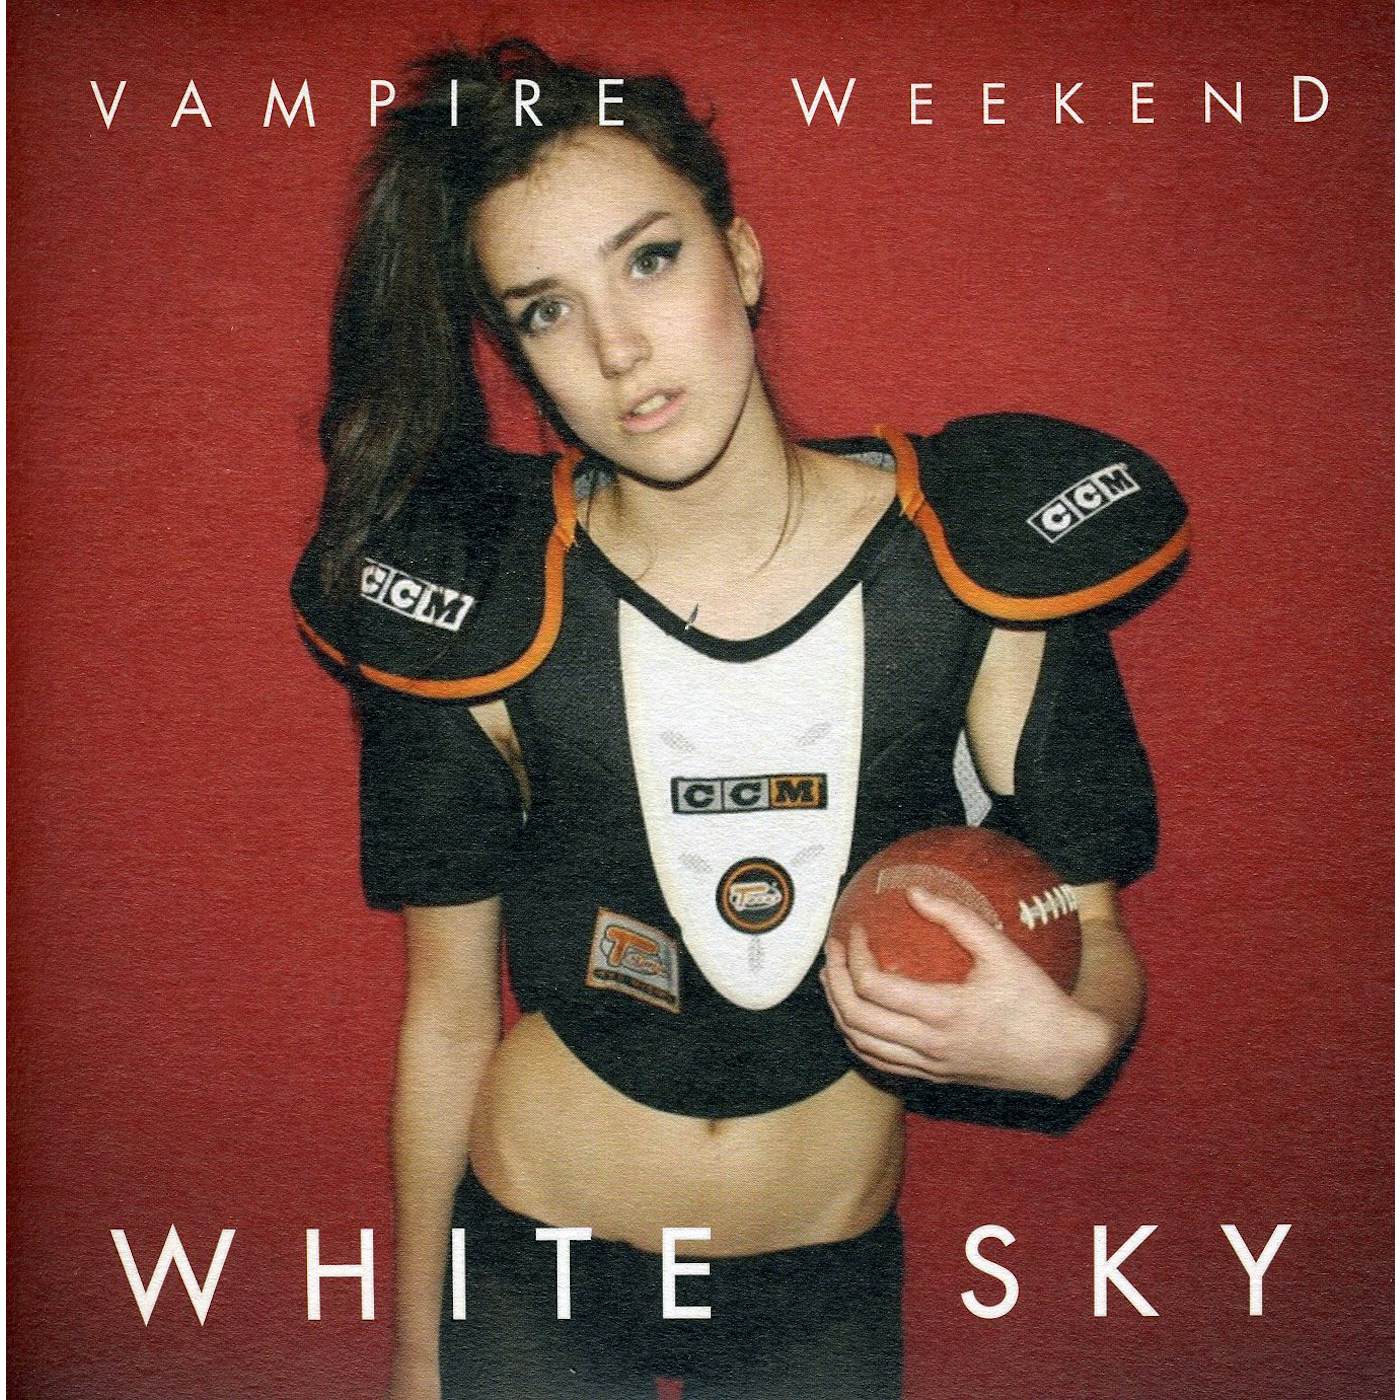 Vampire Weekend WHITE SKY Vinyl Record - UK Release